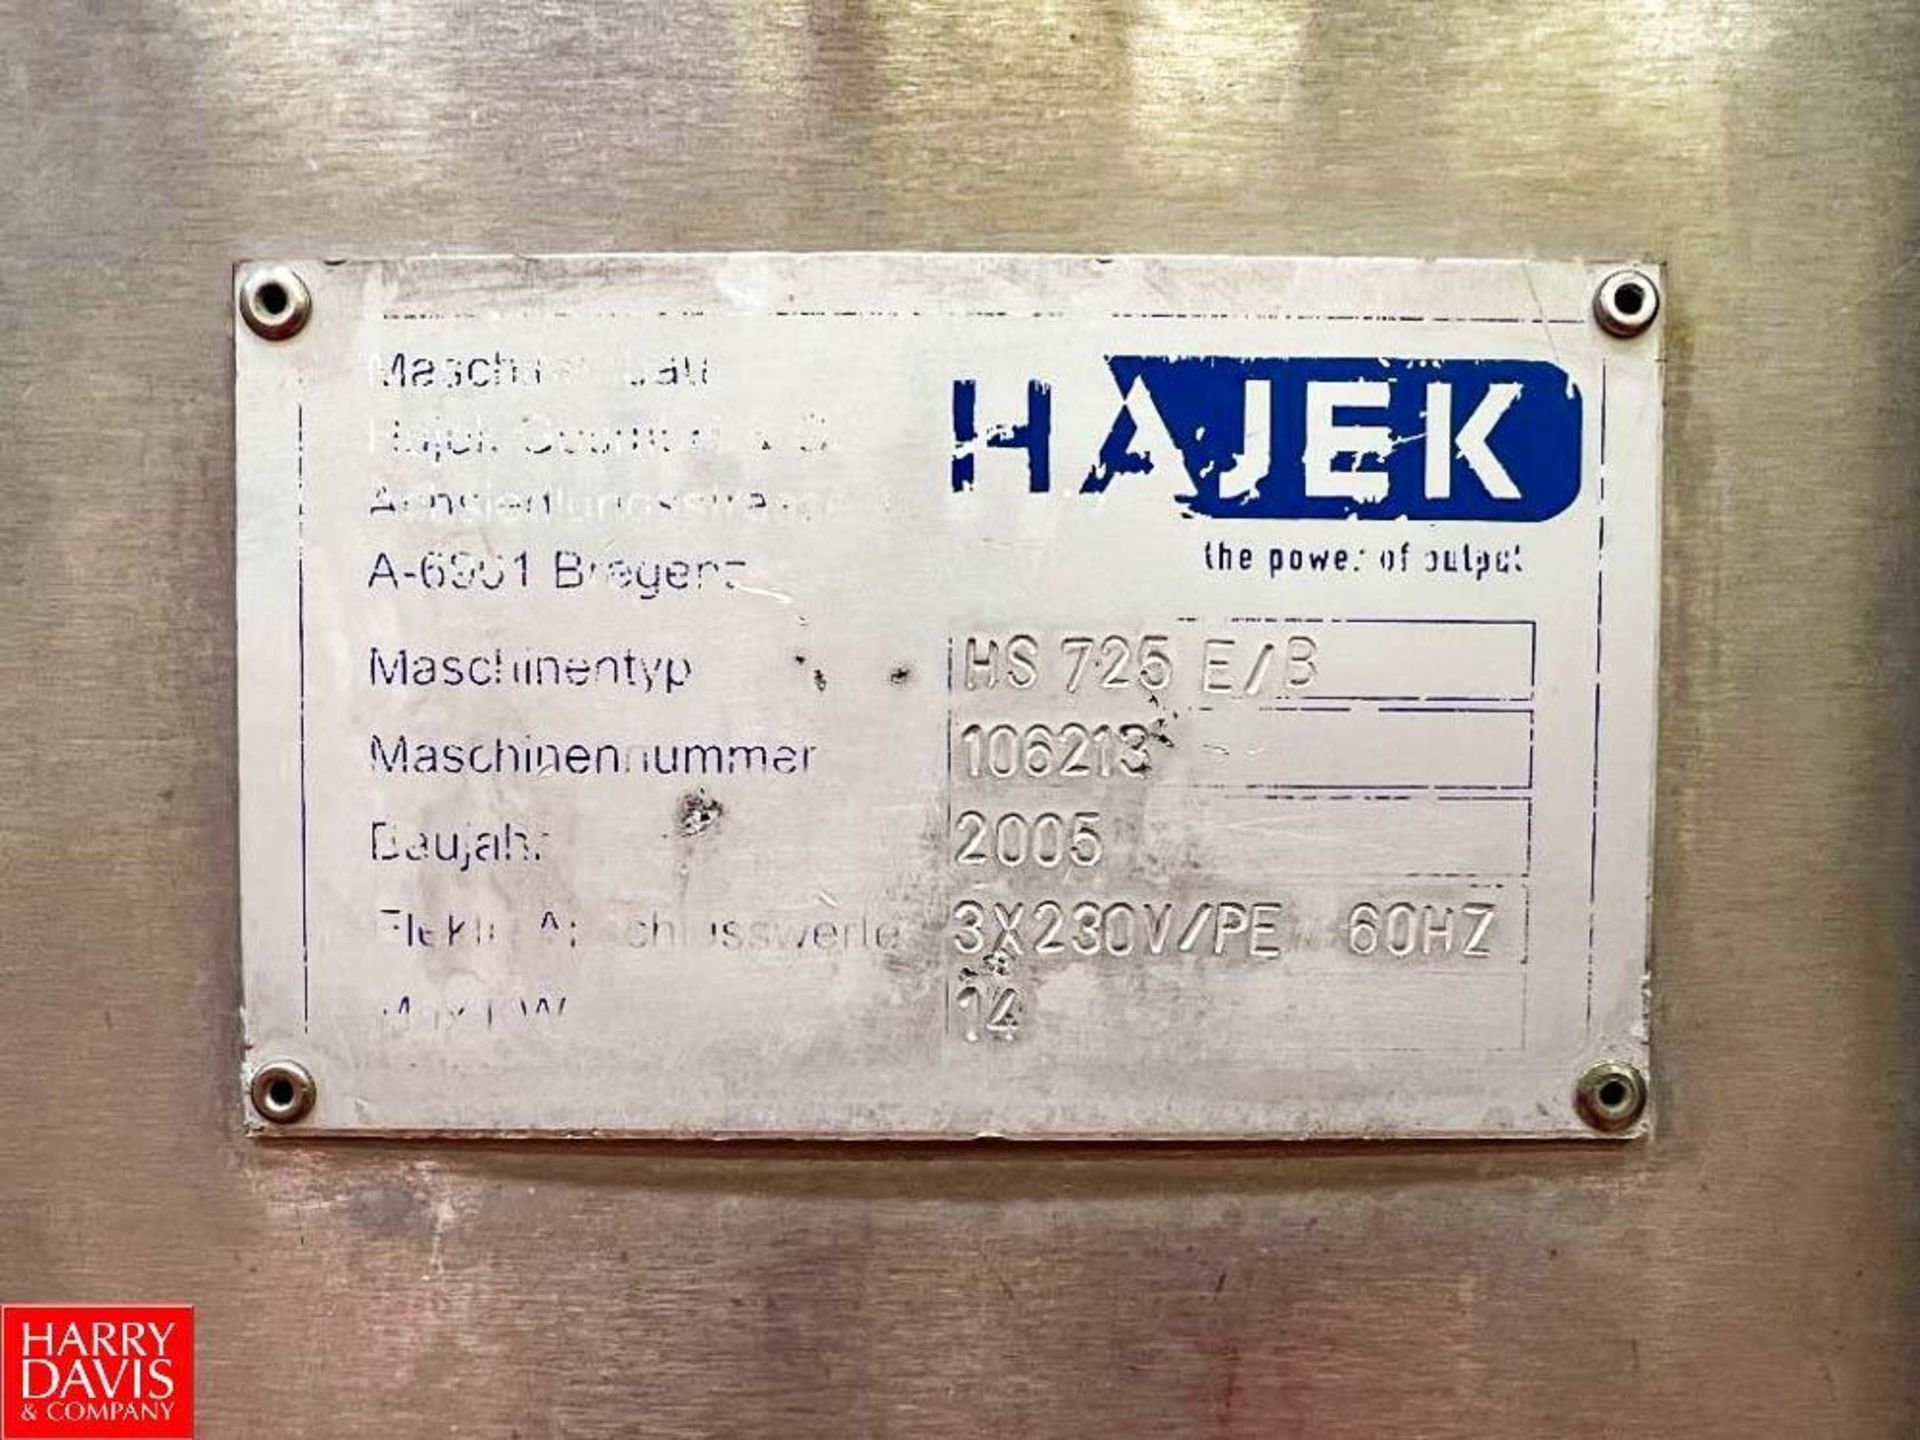 Hajek S/S Slicer, Machine Type: HS 725 E/B, Machine No: 106213 with HMI (Location: Plover, WI) - Image 4 of 4